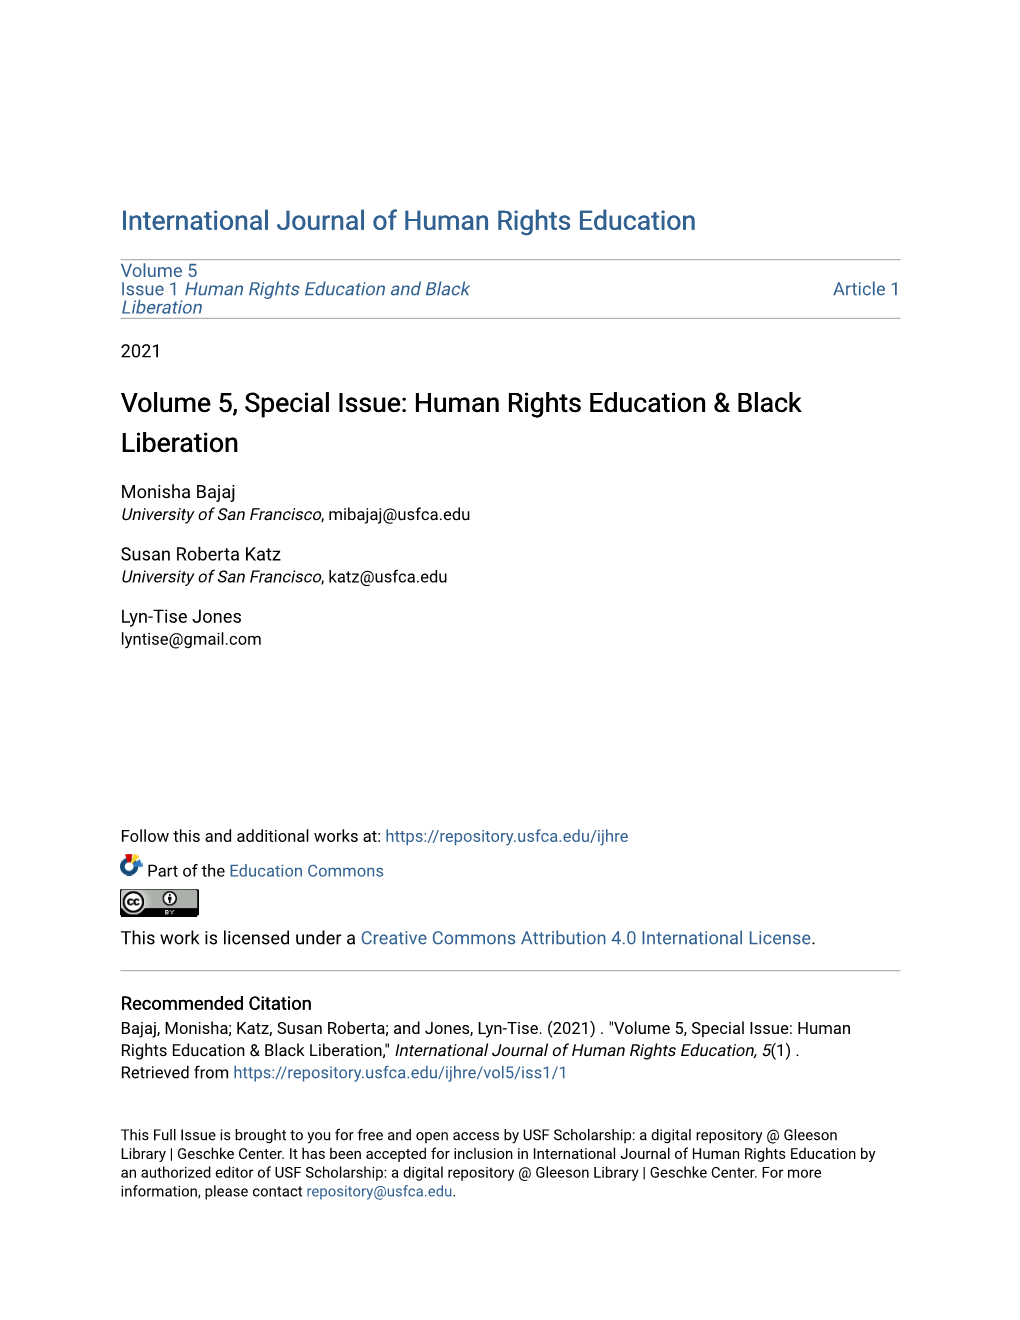 Human Rights Education & Black Liberation